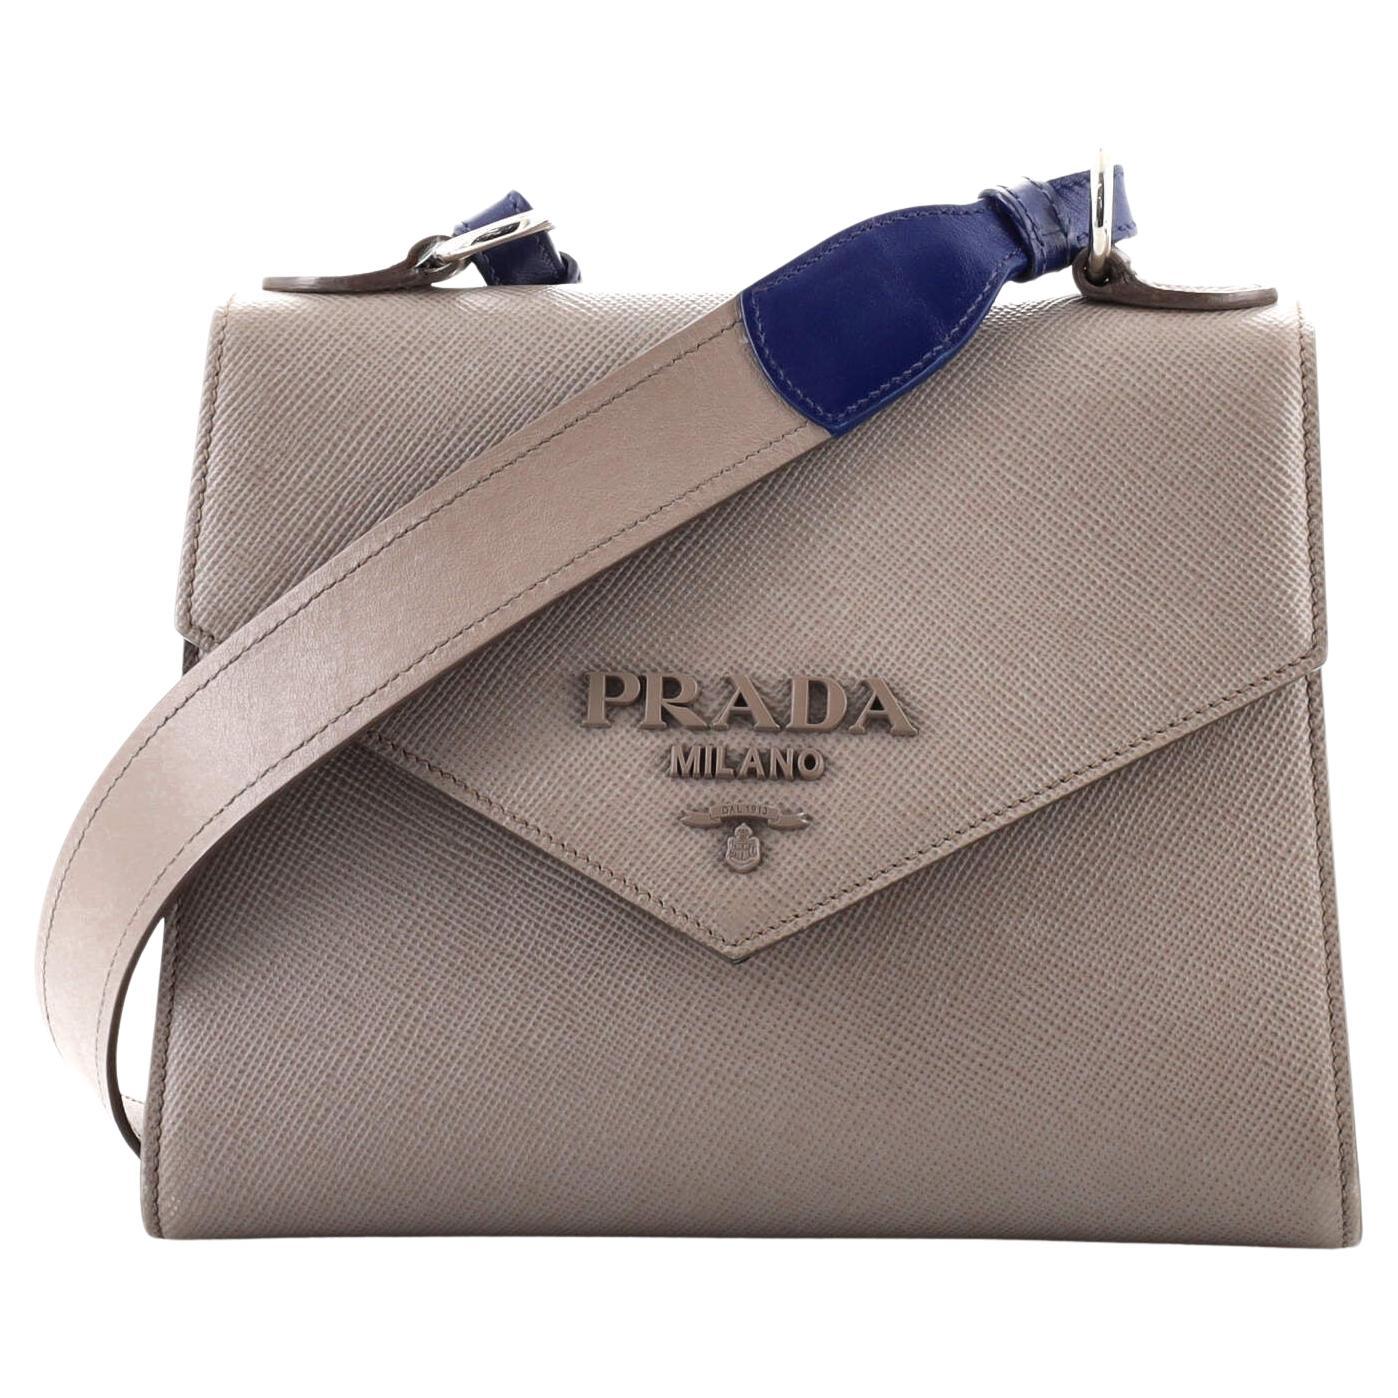 saffiano leather prada monochrome bag